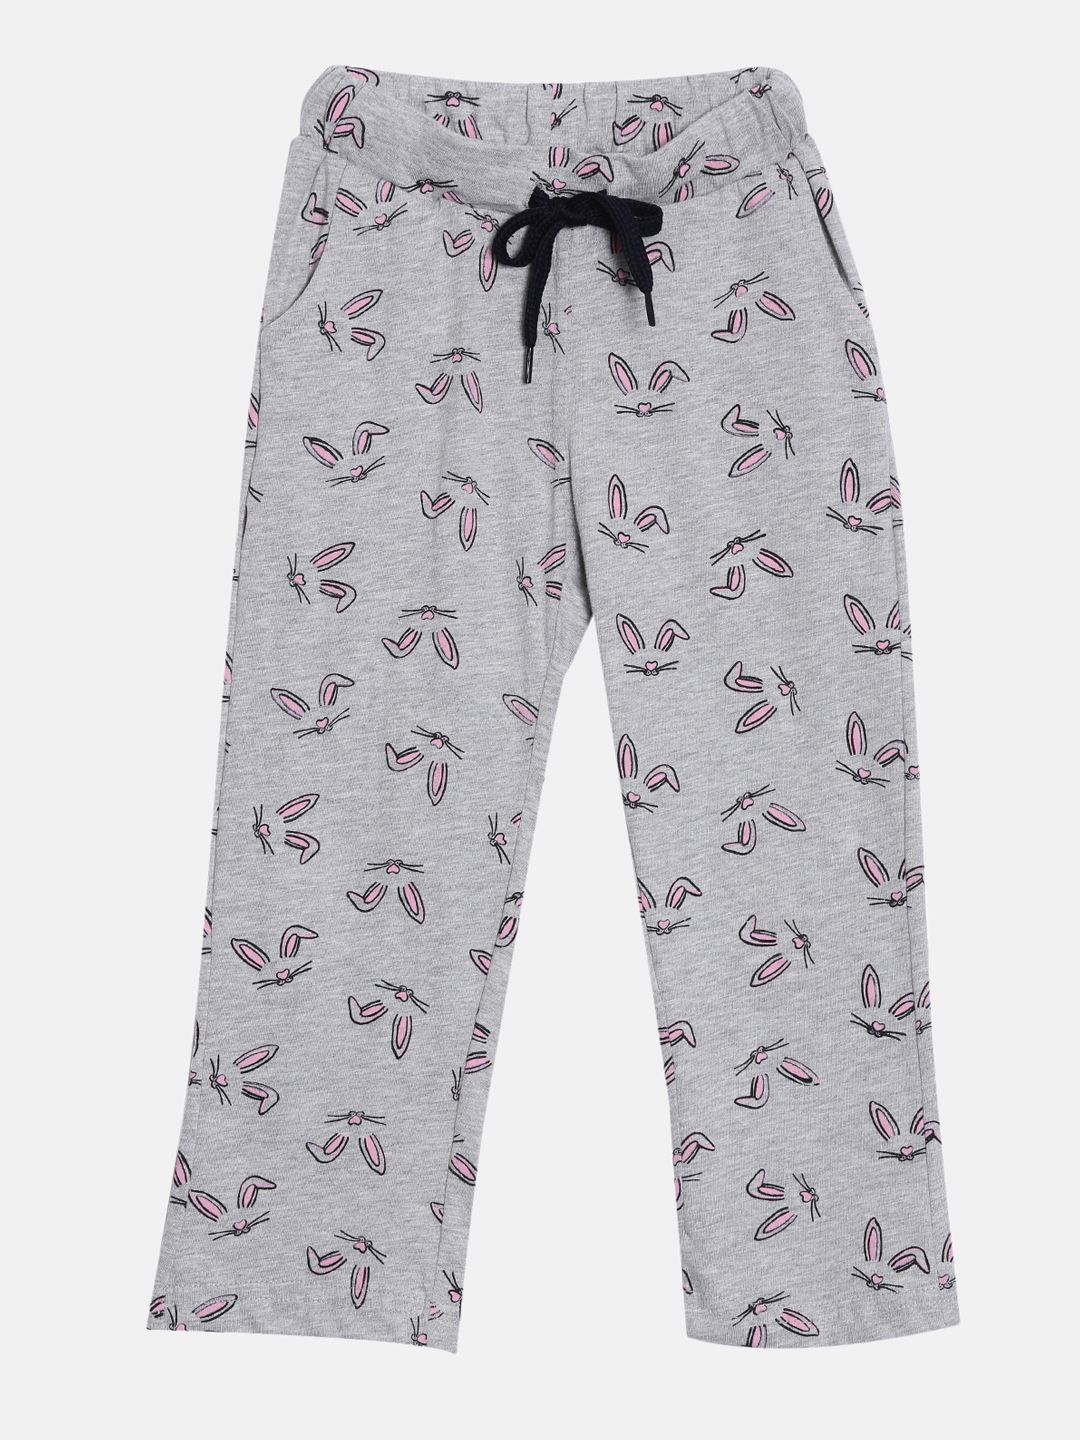 Kryptic Kids Girls Cotton Printed pyjama